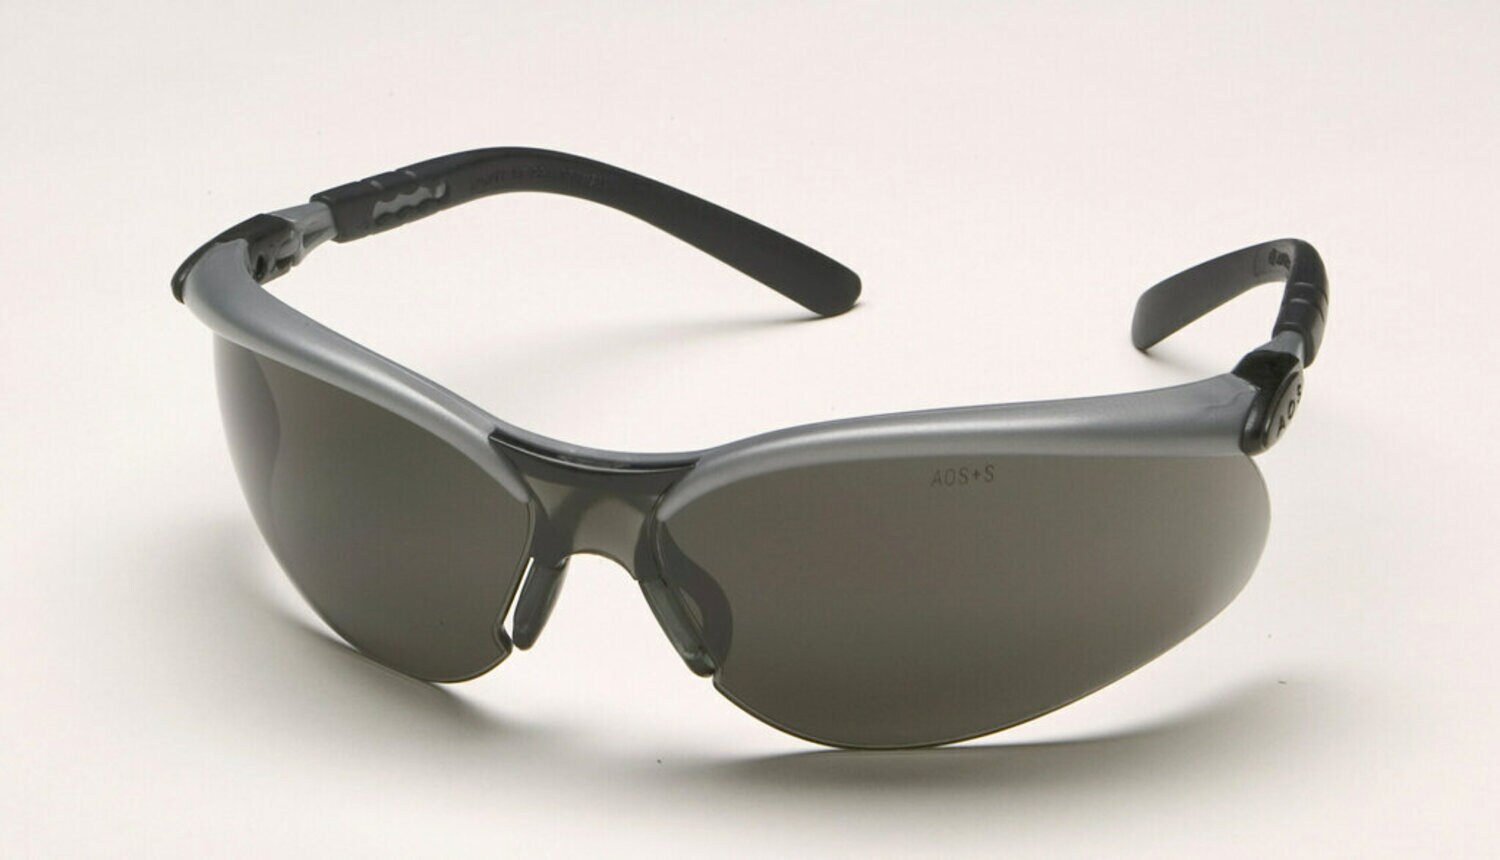 7000052796 - 3M BX Protective Eyewear 11381-00000-20, Grey Anti-Fog Lens,
Silver/Black Frame, 20 ea/Case